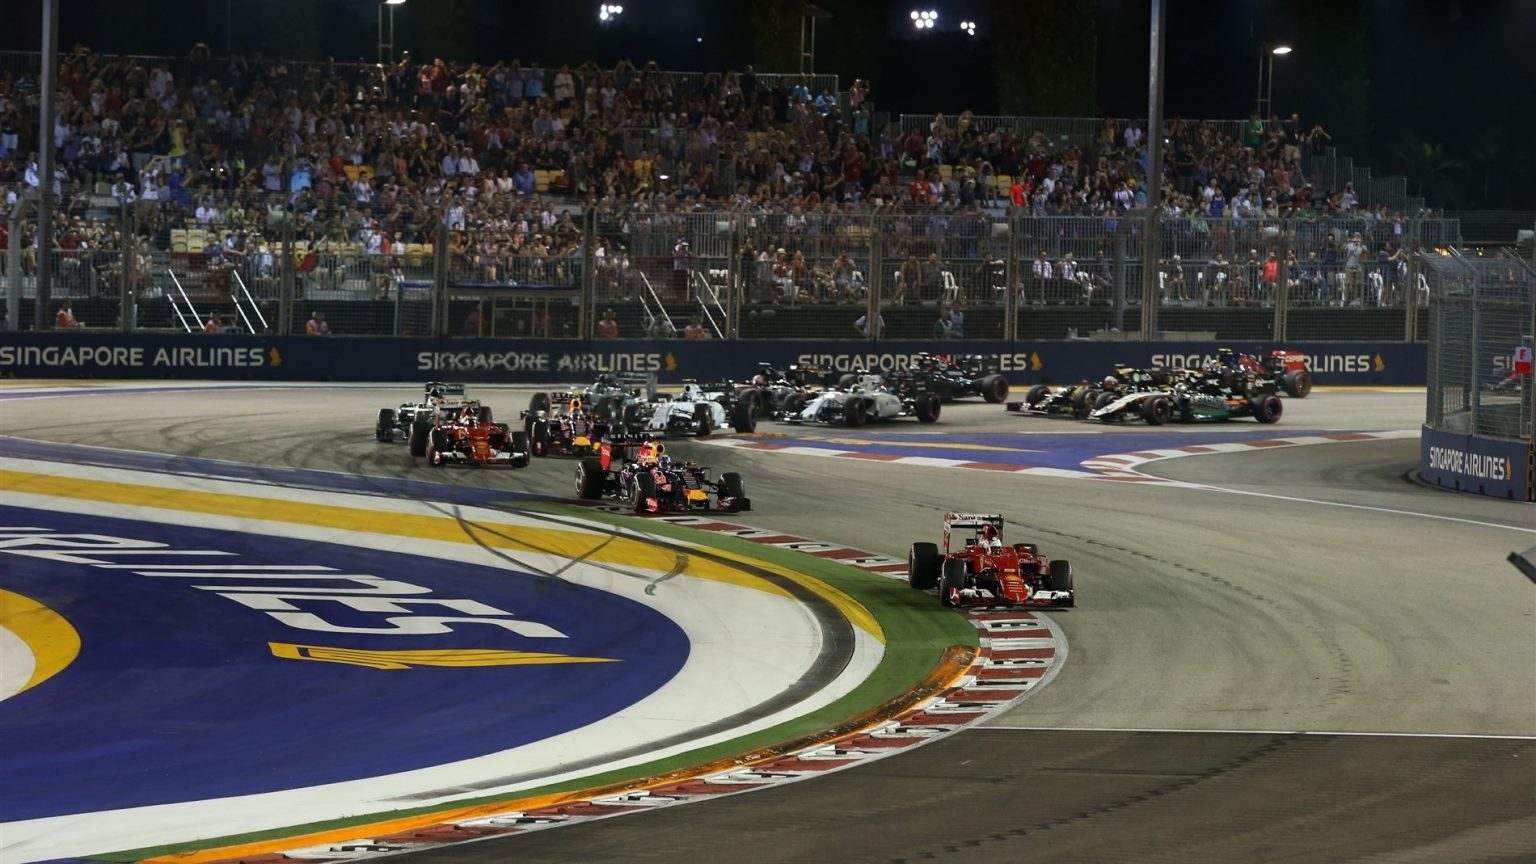 F1, Σιγκαπούρη: μαθήματα “στρατηγικής” ο Vettel, “αστοχία” των Mercedes